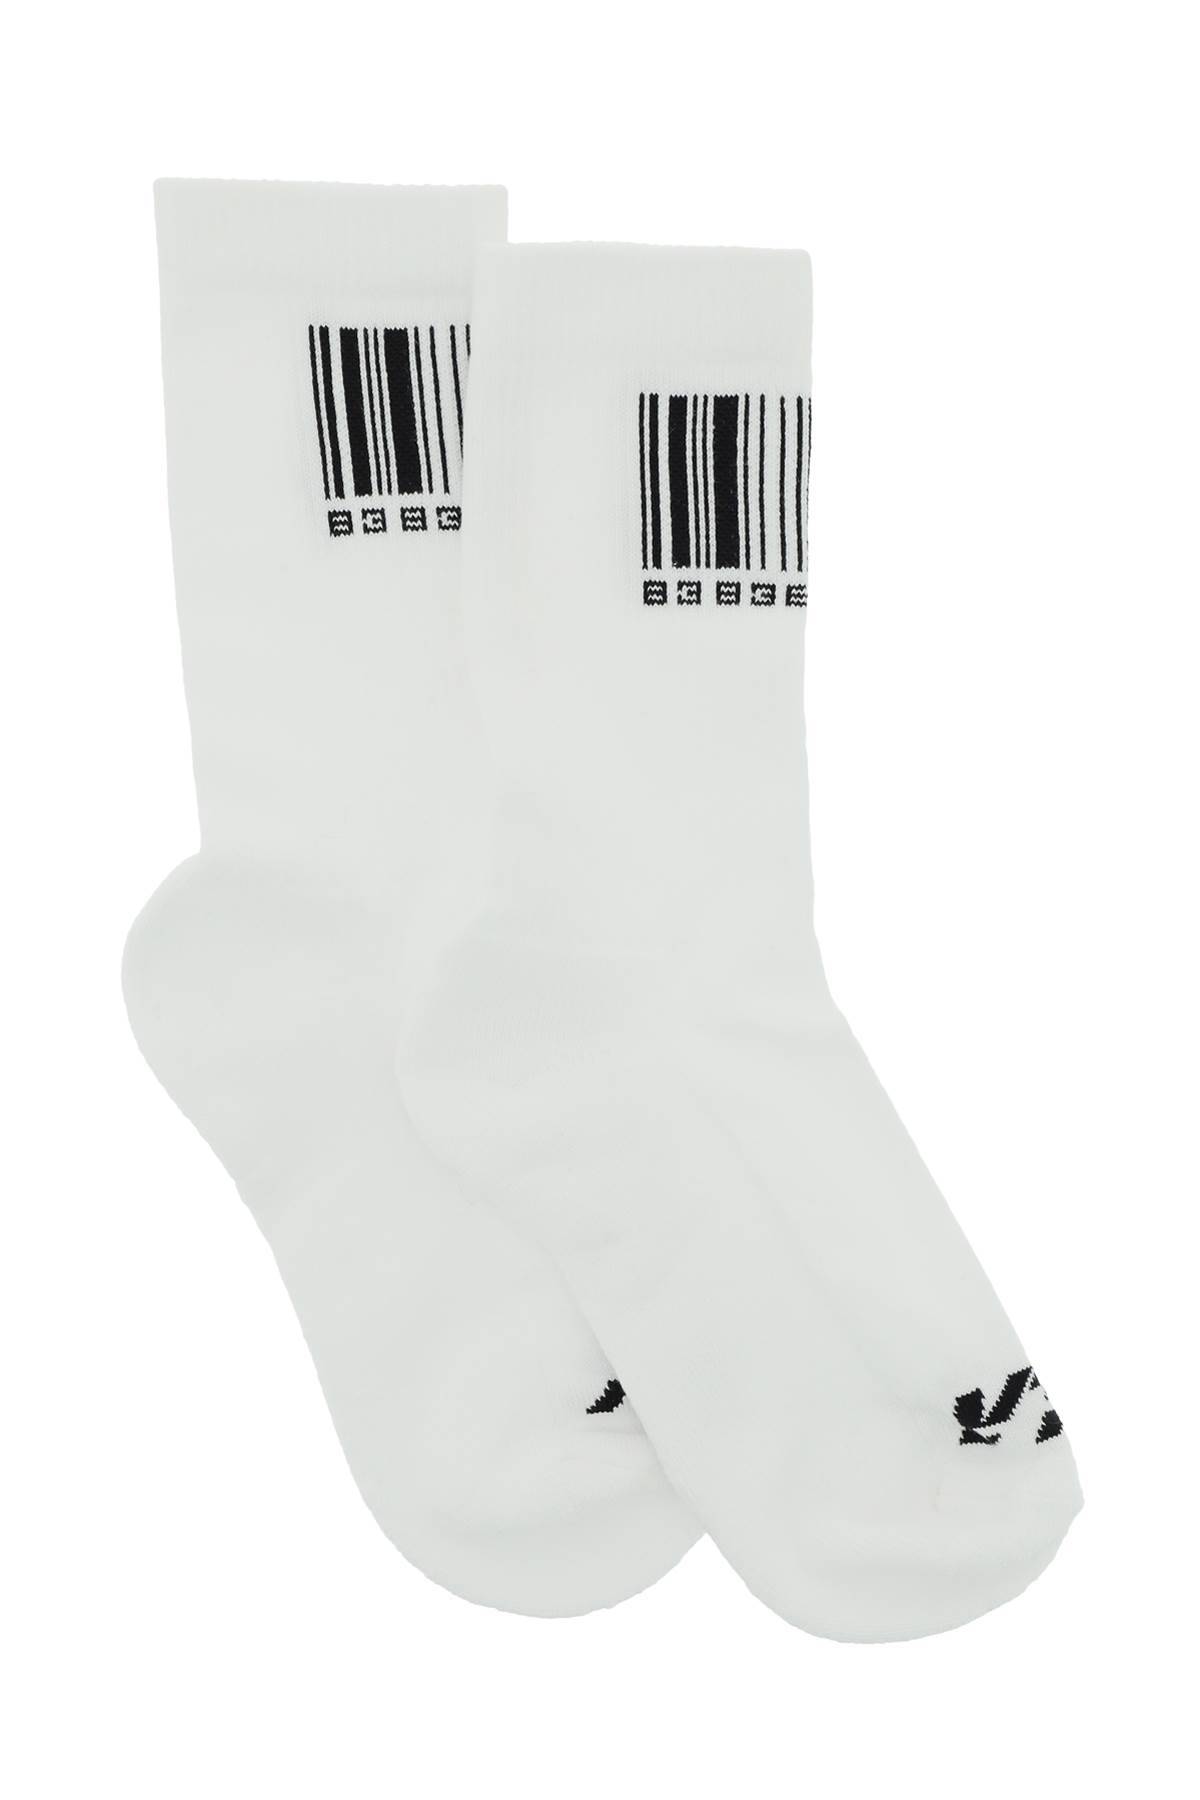 Vtmnts VTMNTS barcode socks